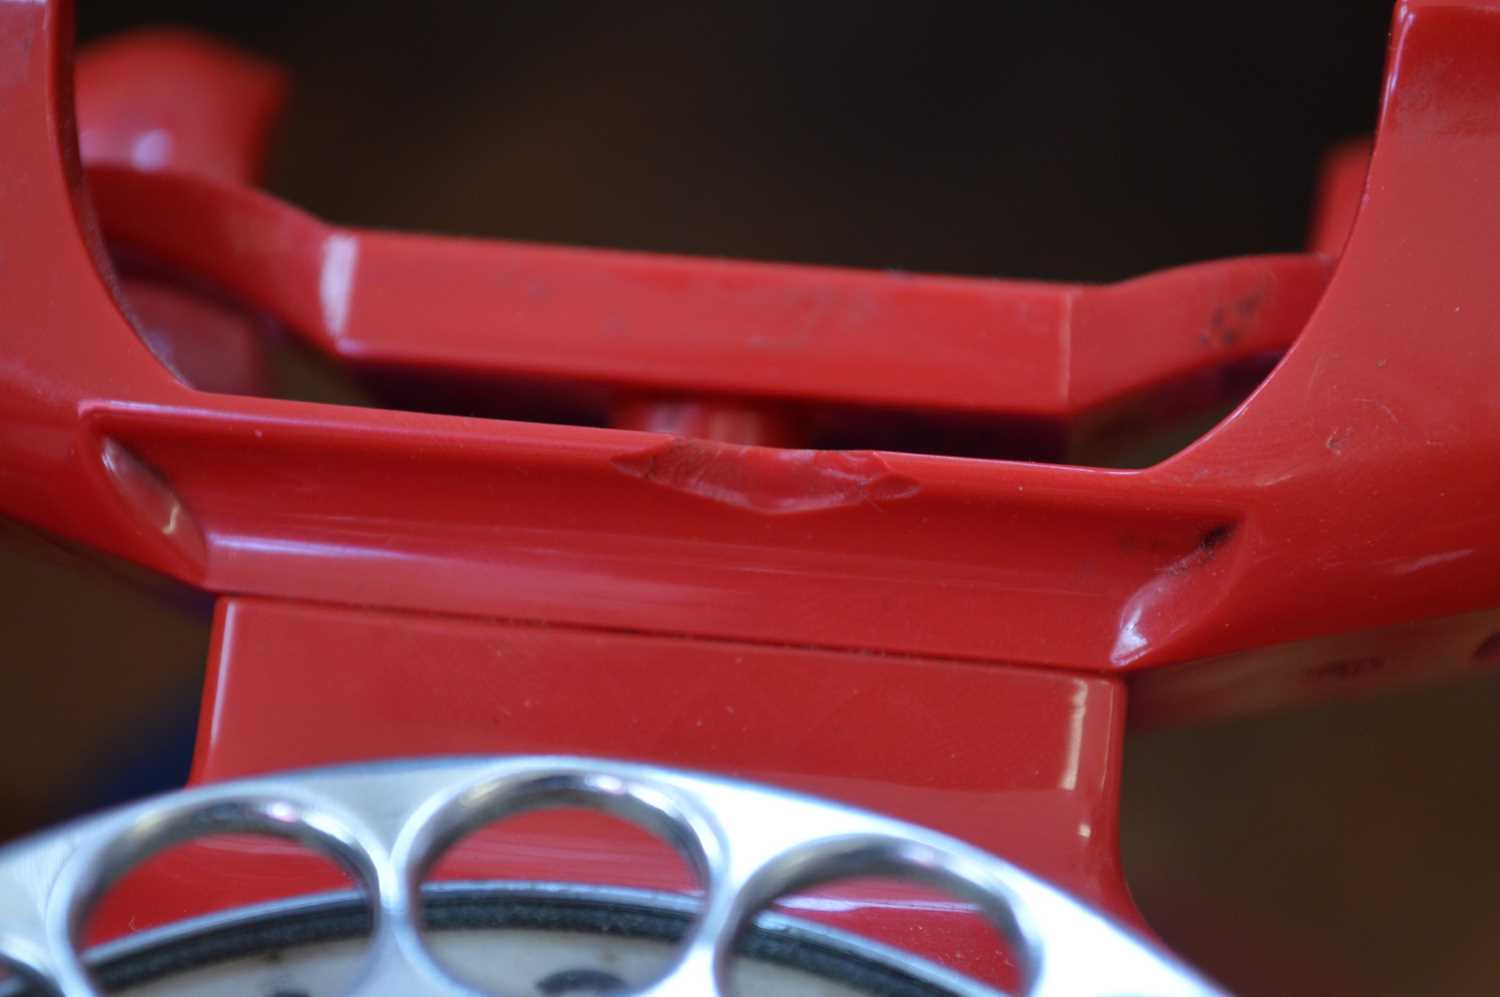 Model 232 red bakelite telephone - Image 11 of 11